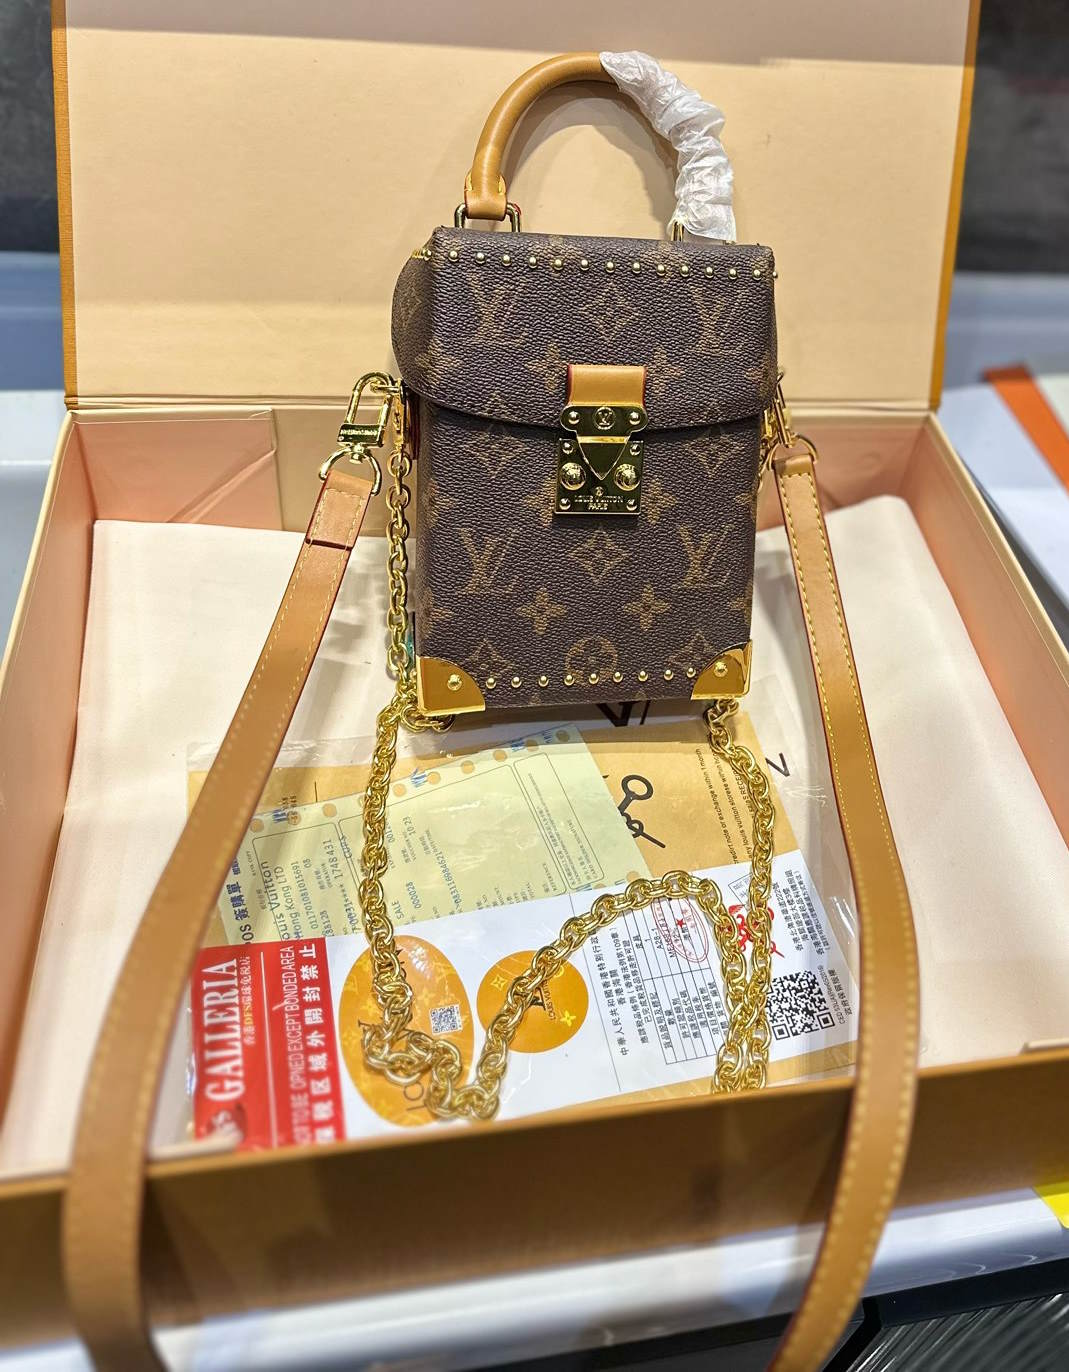 Slingbag/Handbag with box LV